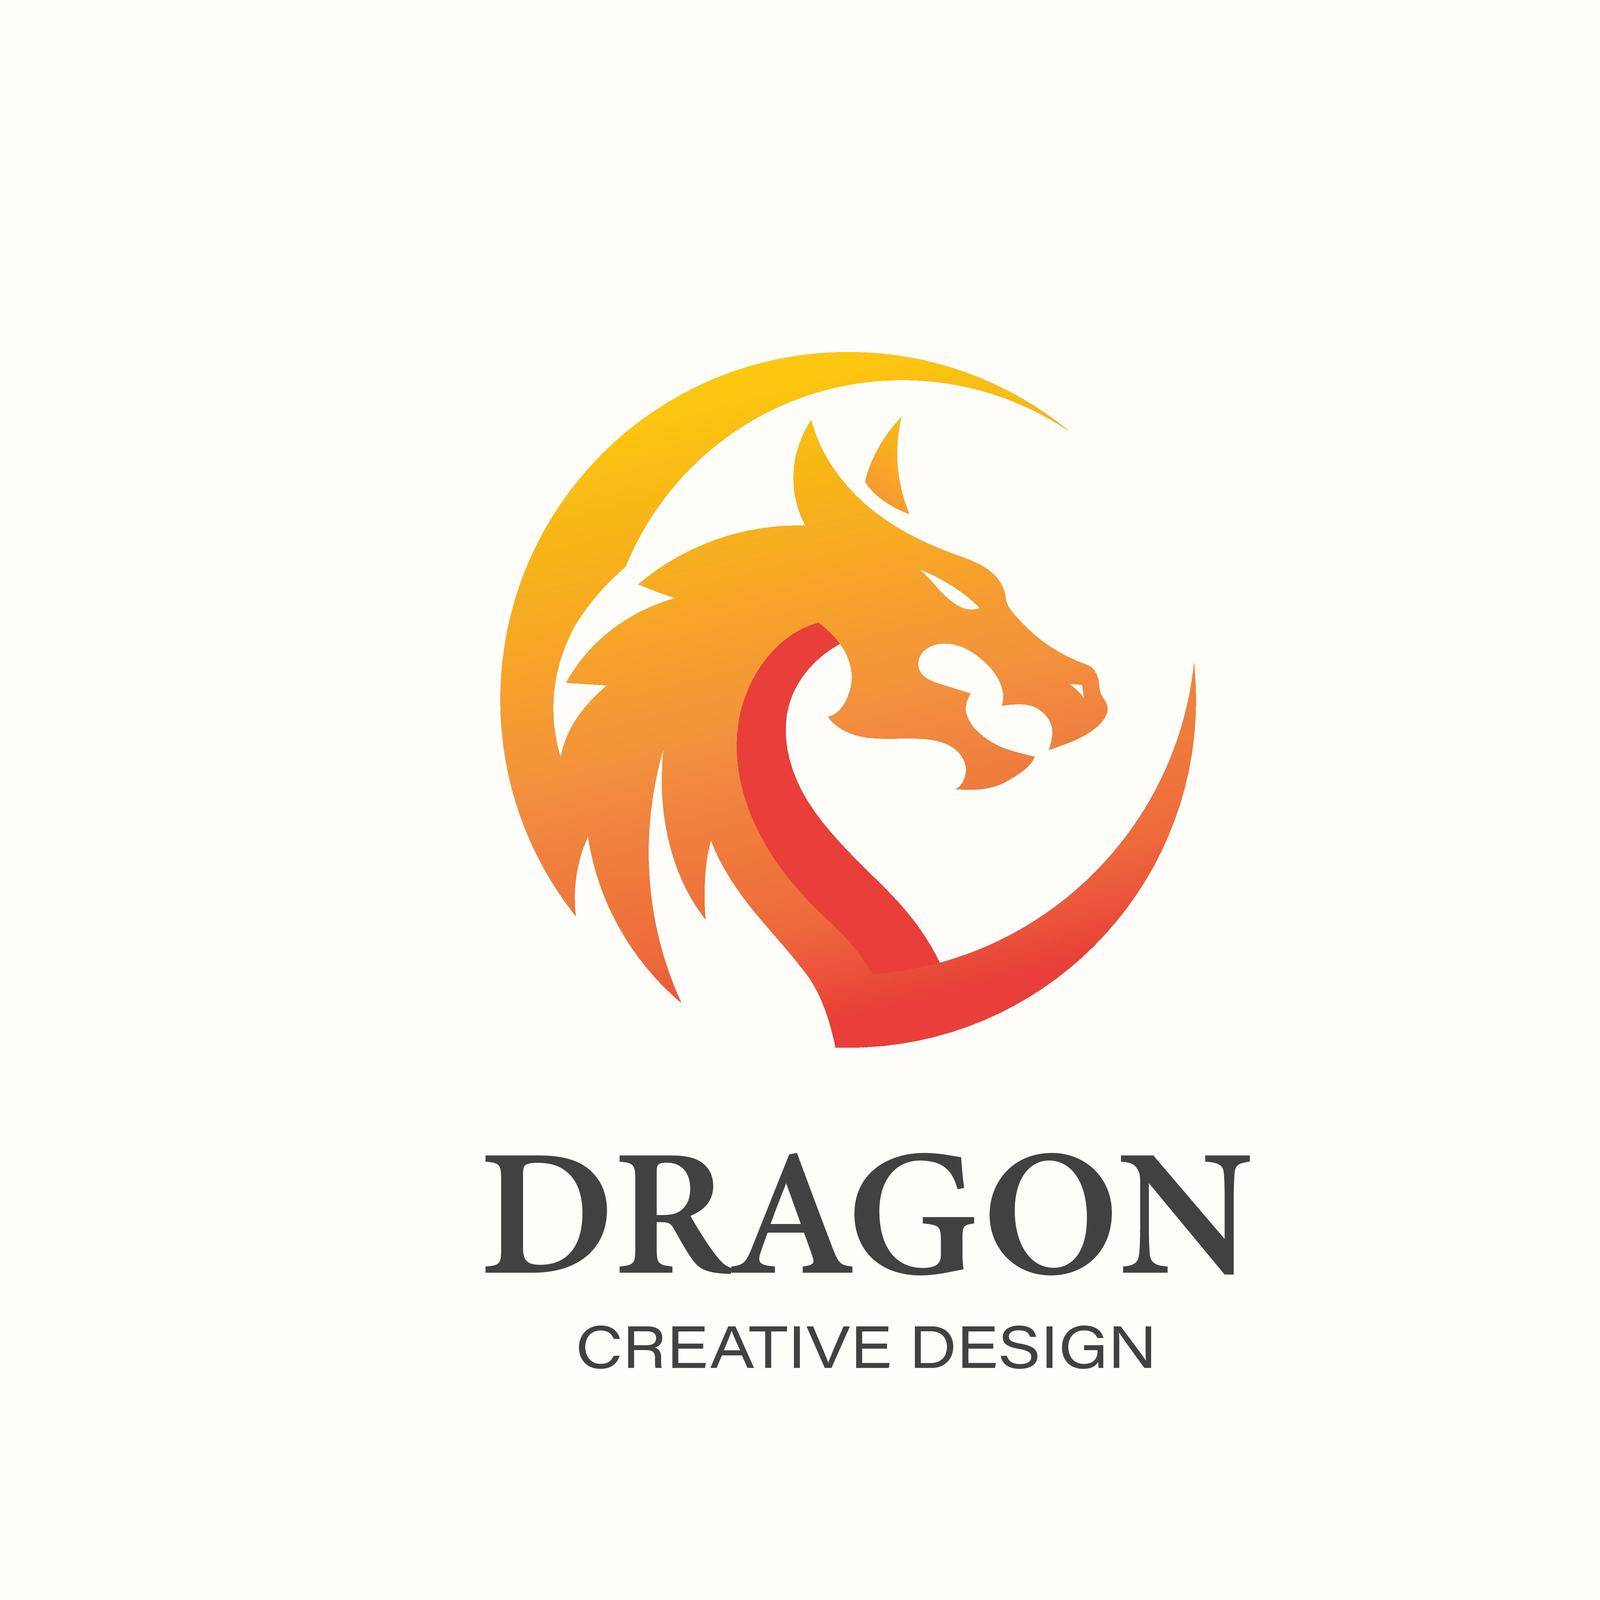 dragon circle vector logo. chinese culture symbol. dragon head in a circle shape logo design